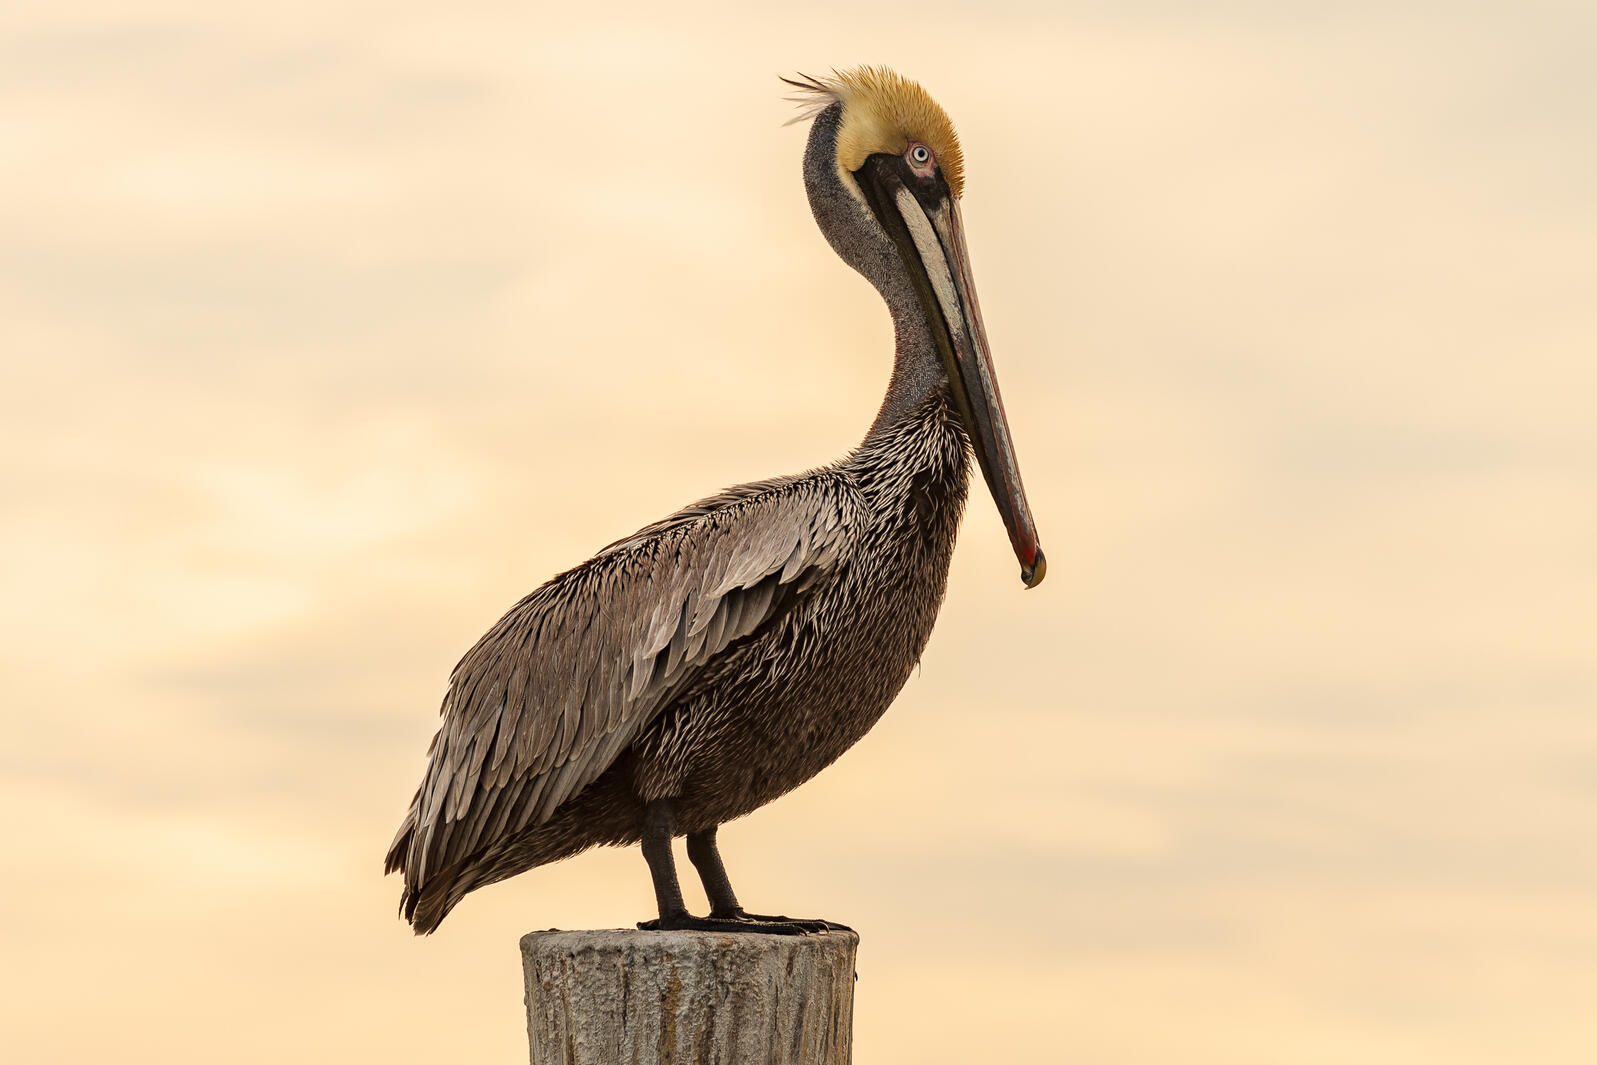 Brown Pelican on a dock.